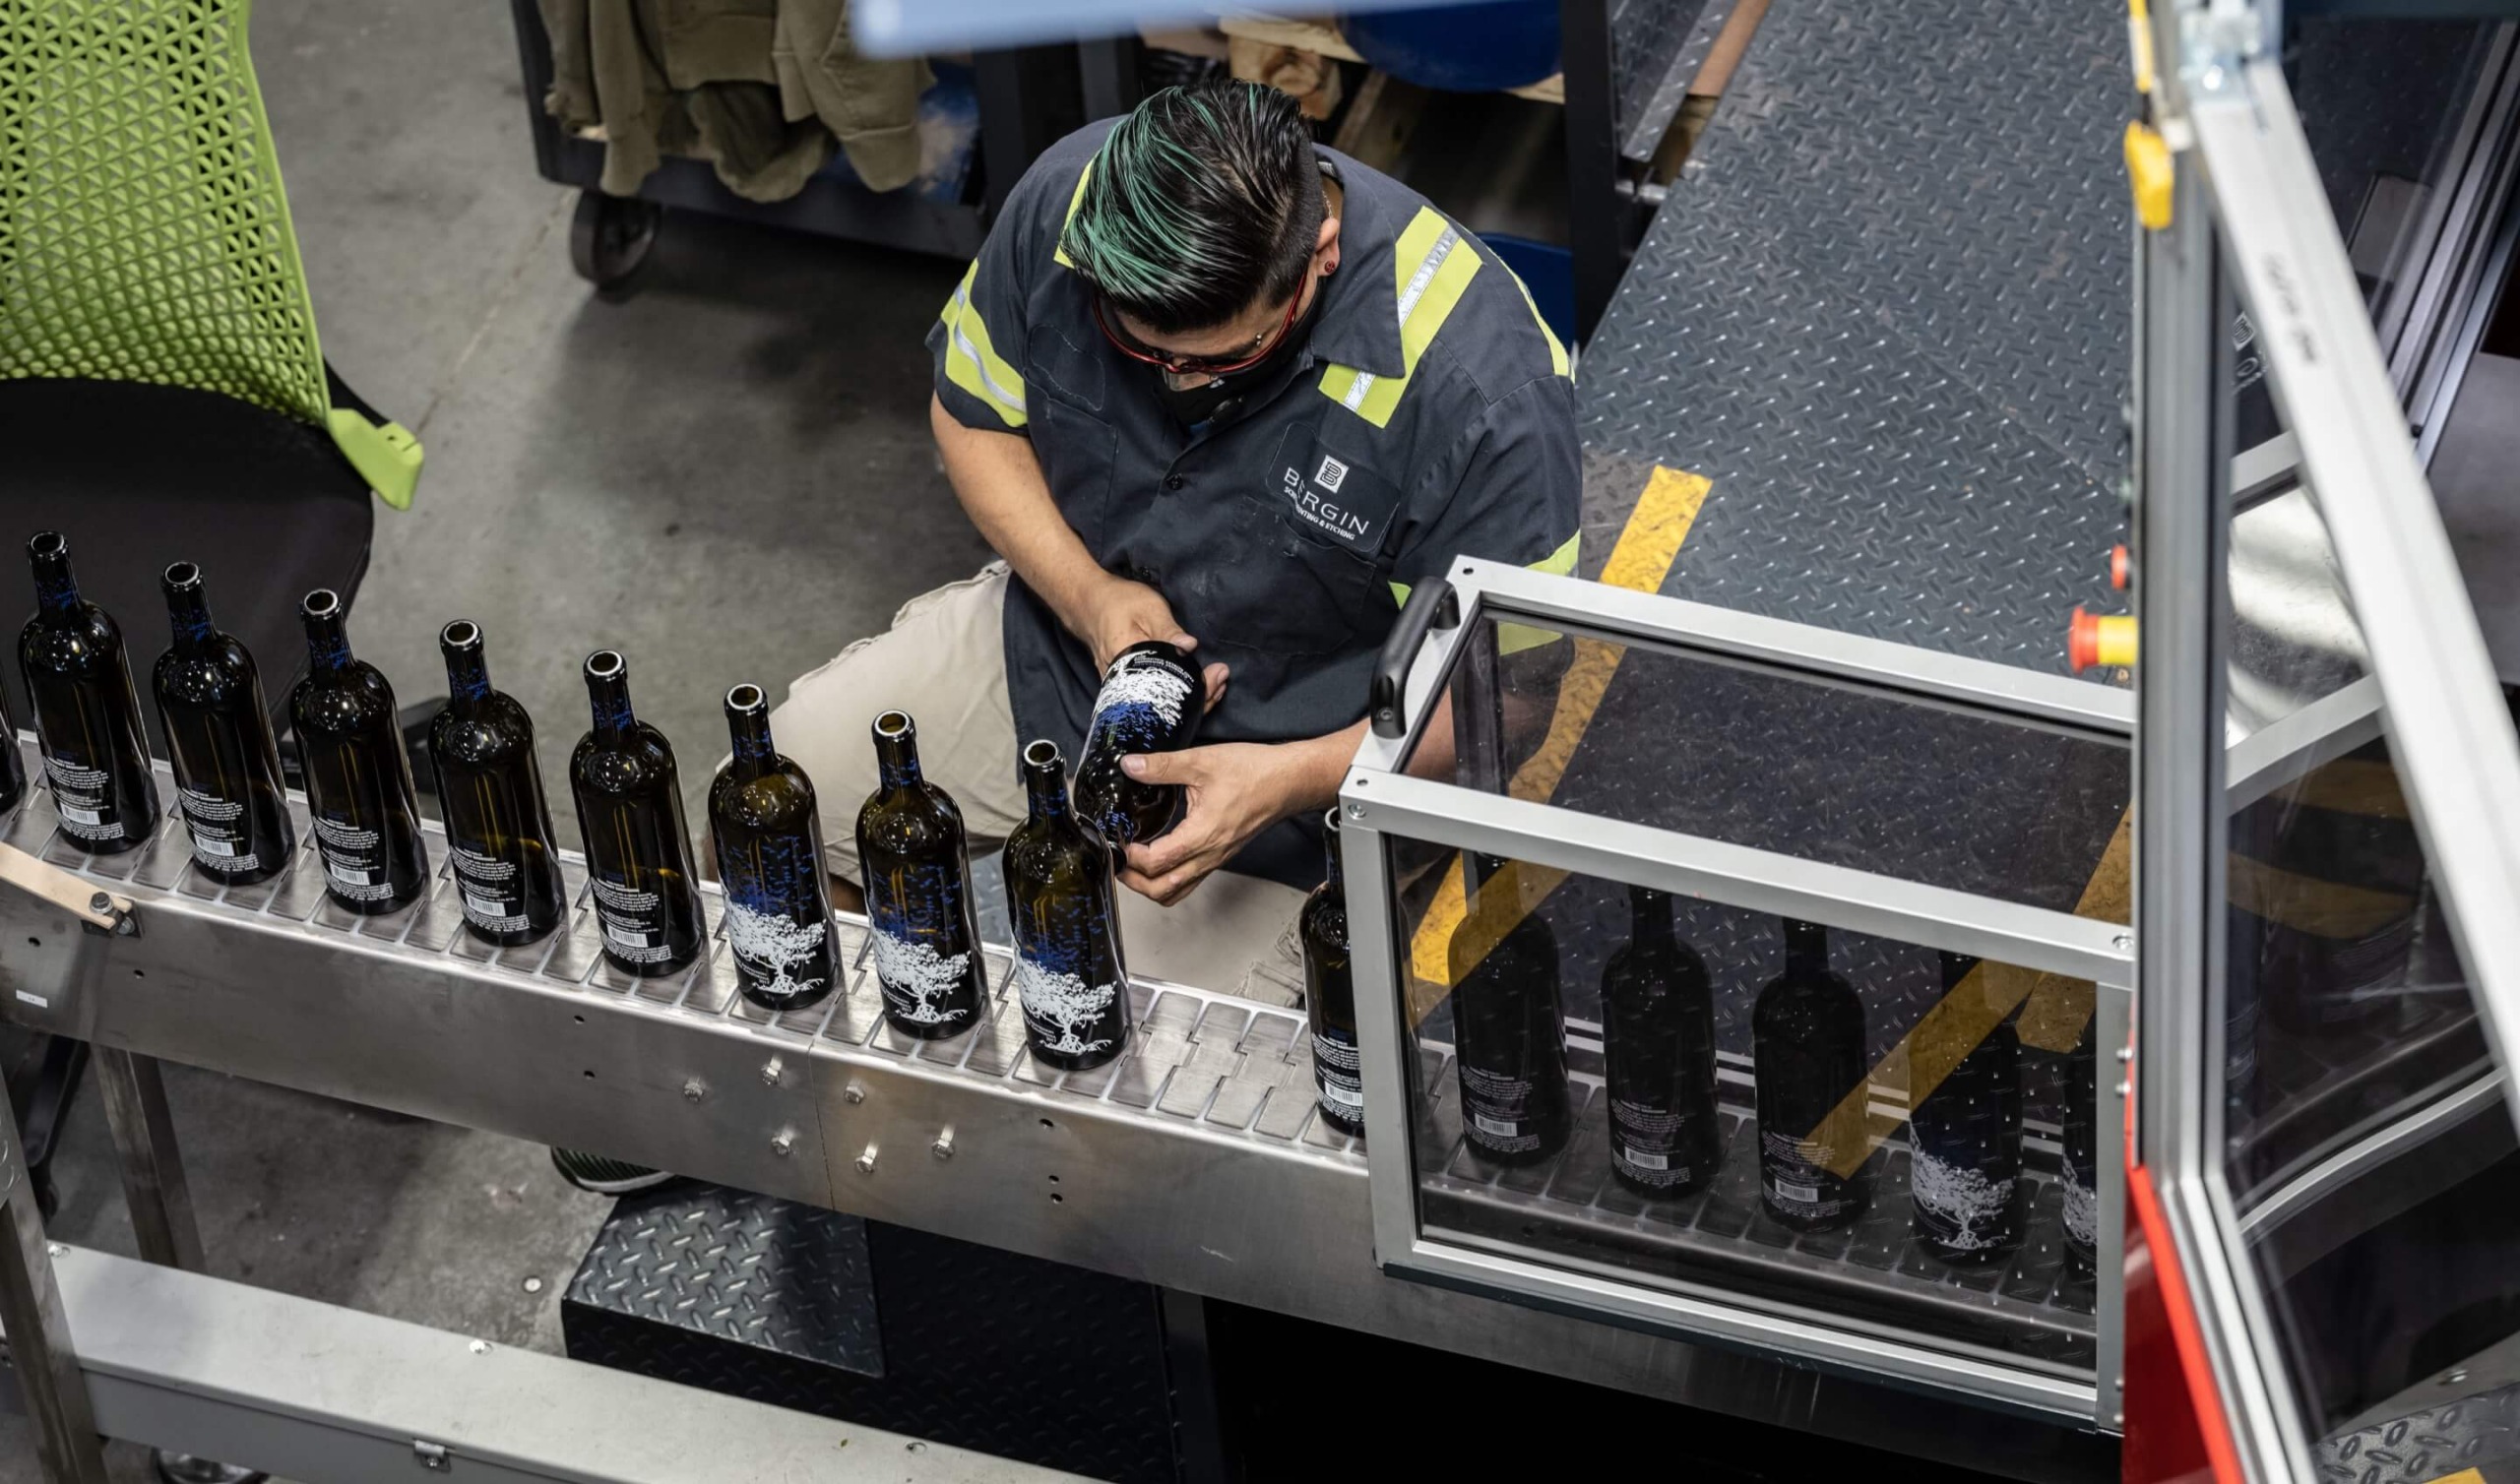 screen printing wine bottles in Napa Valley